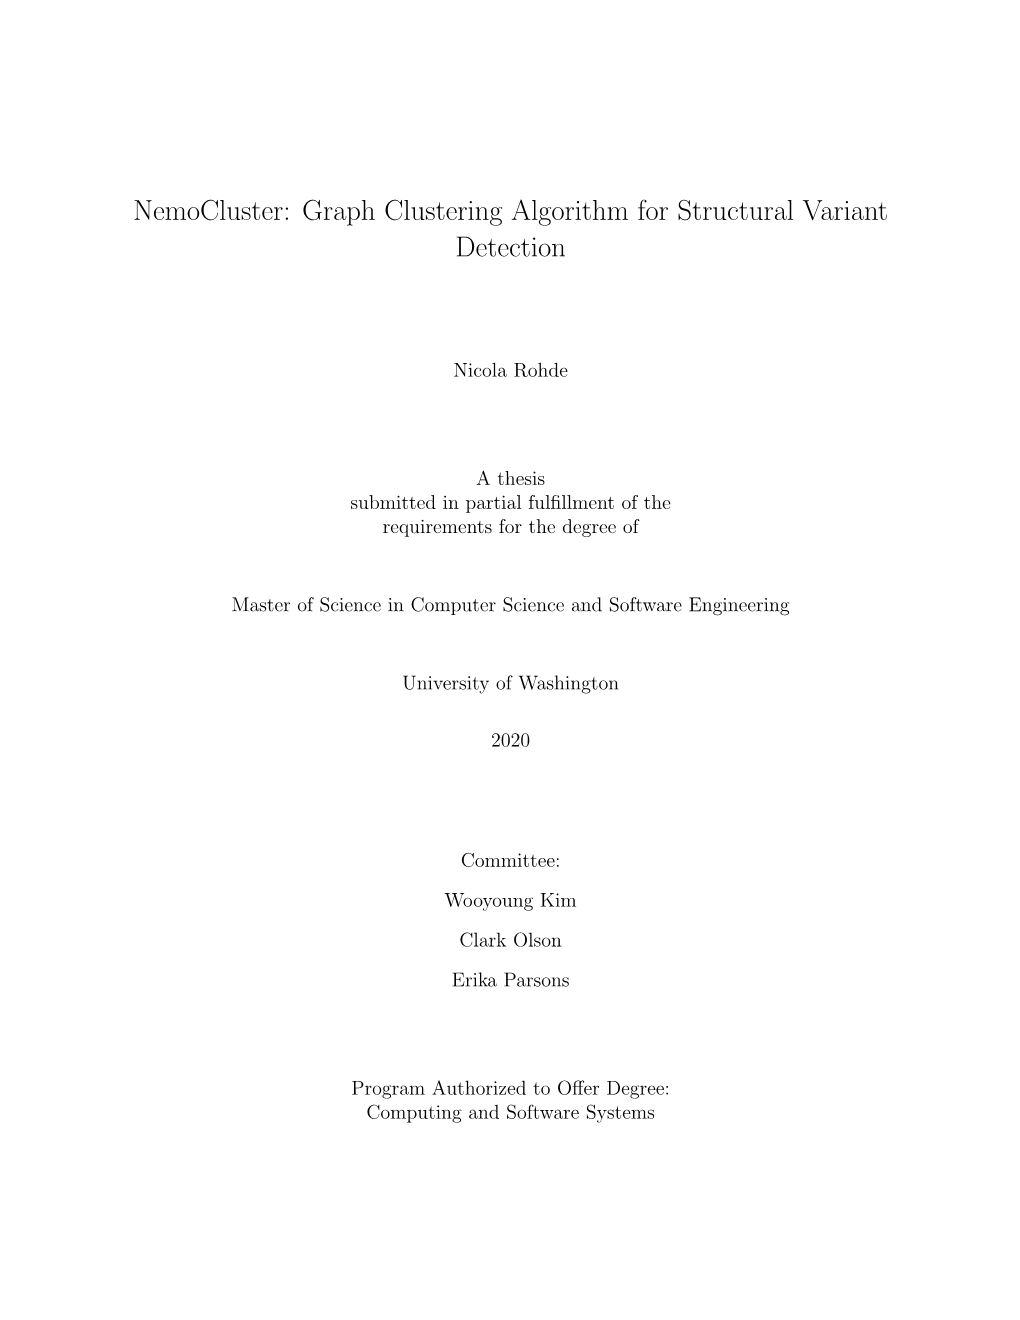 Graph Clustering Algorithm for Structural Variant Detection